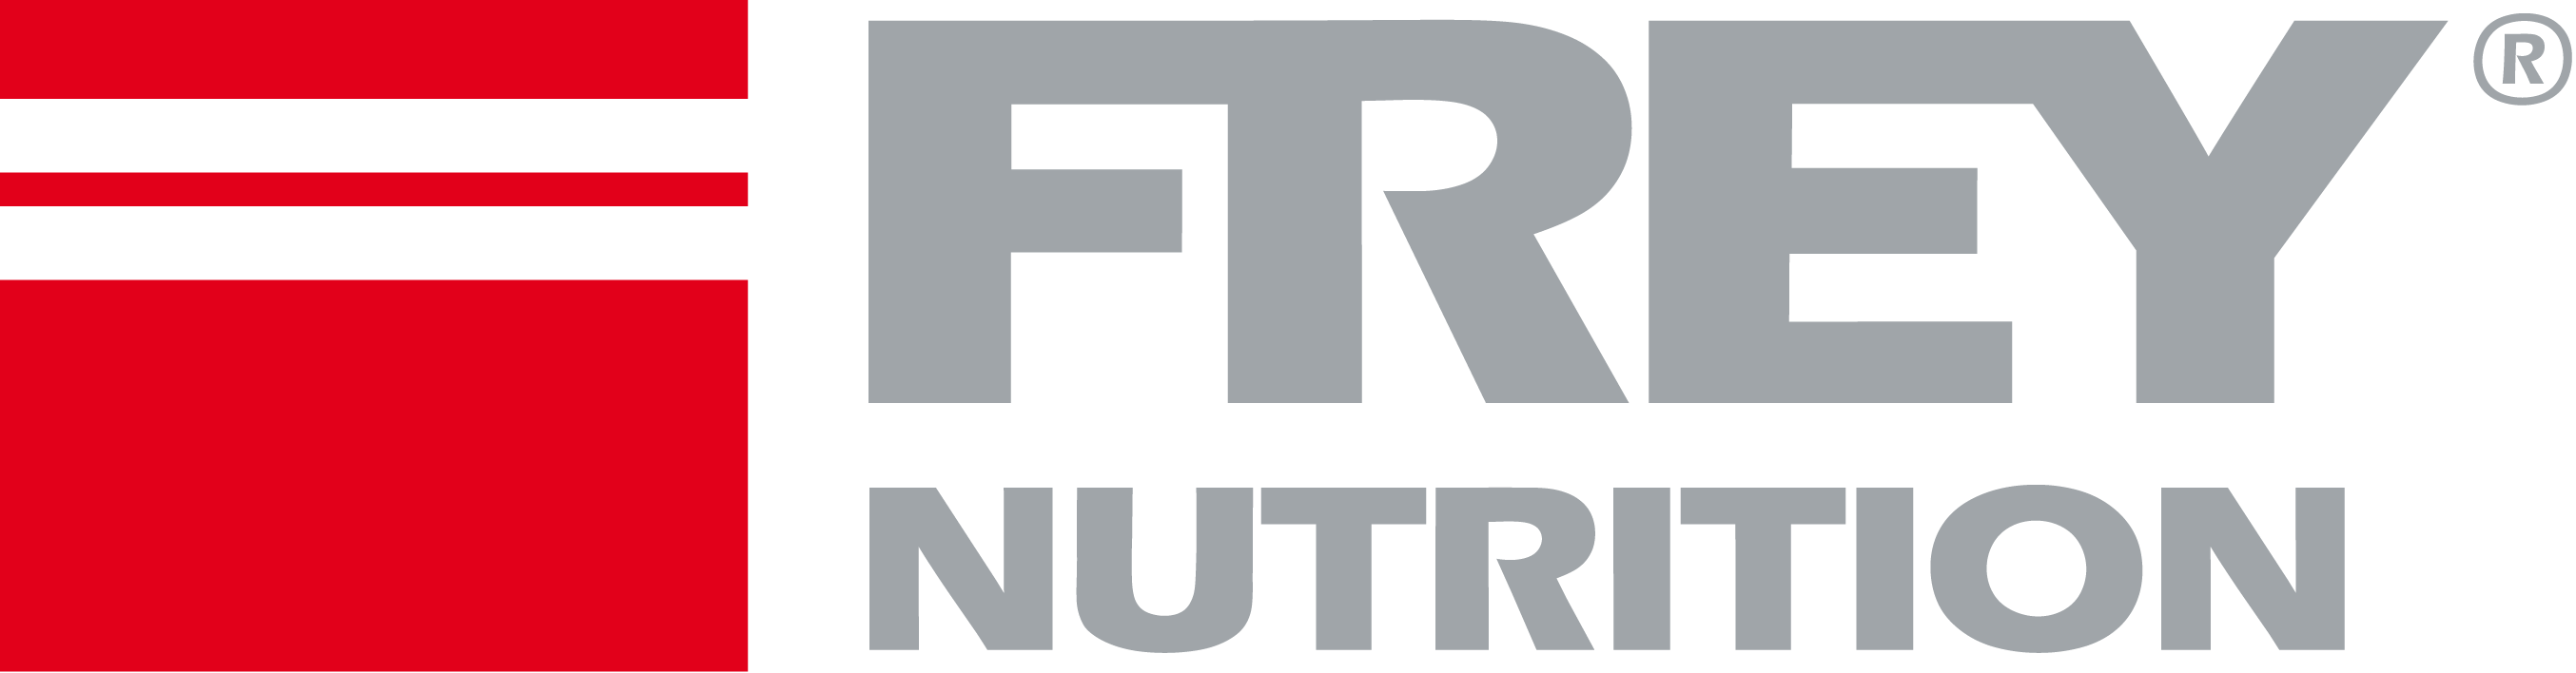 frey nutrition logo red grey gradient